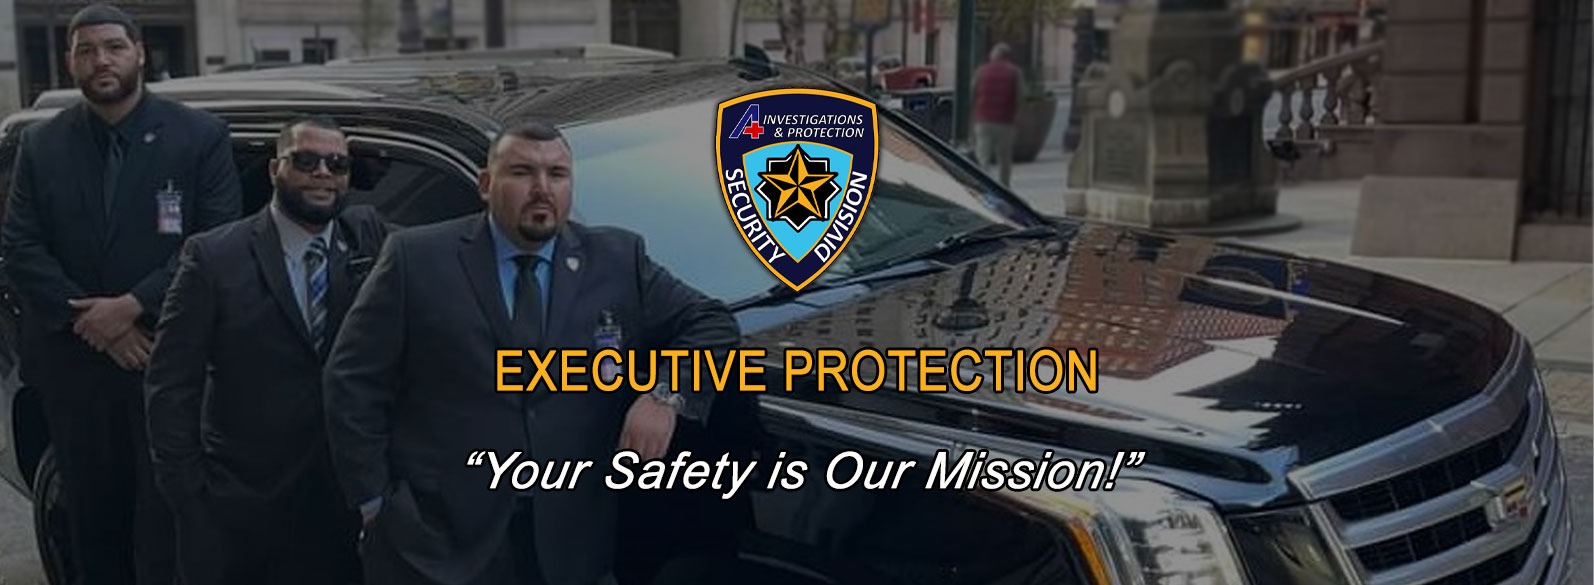 Executive Protection Header Image